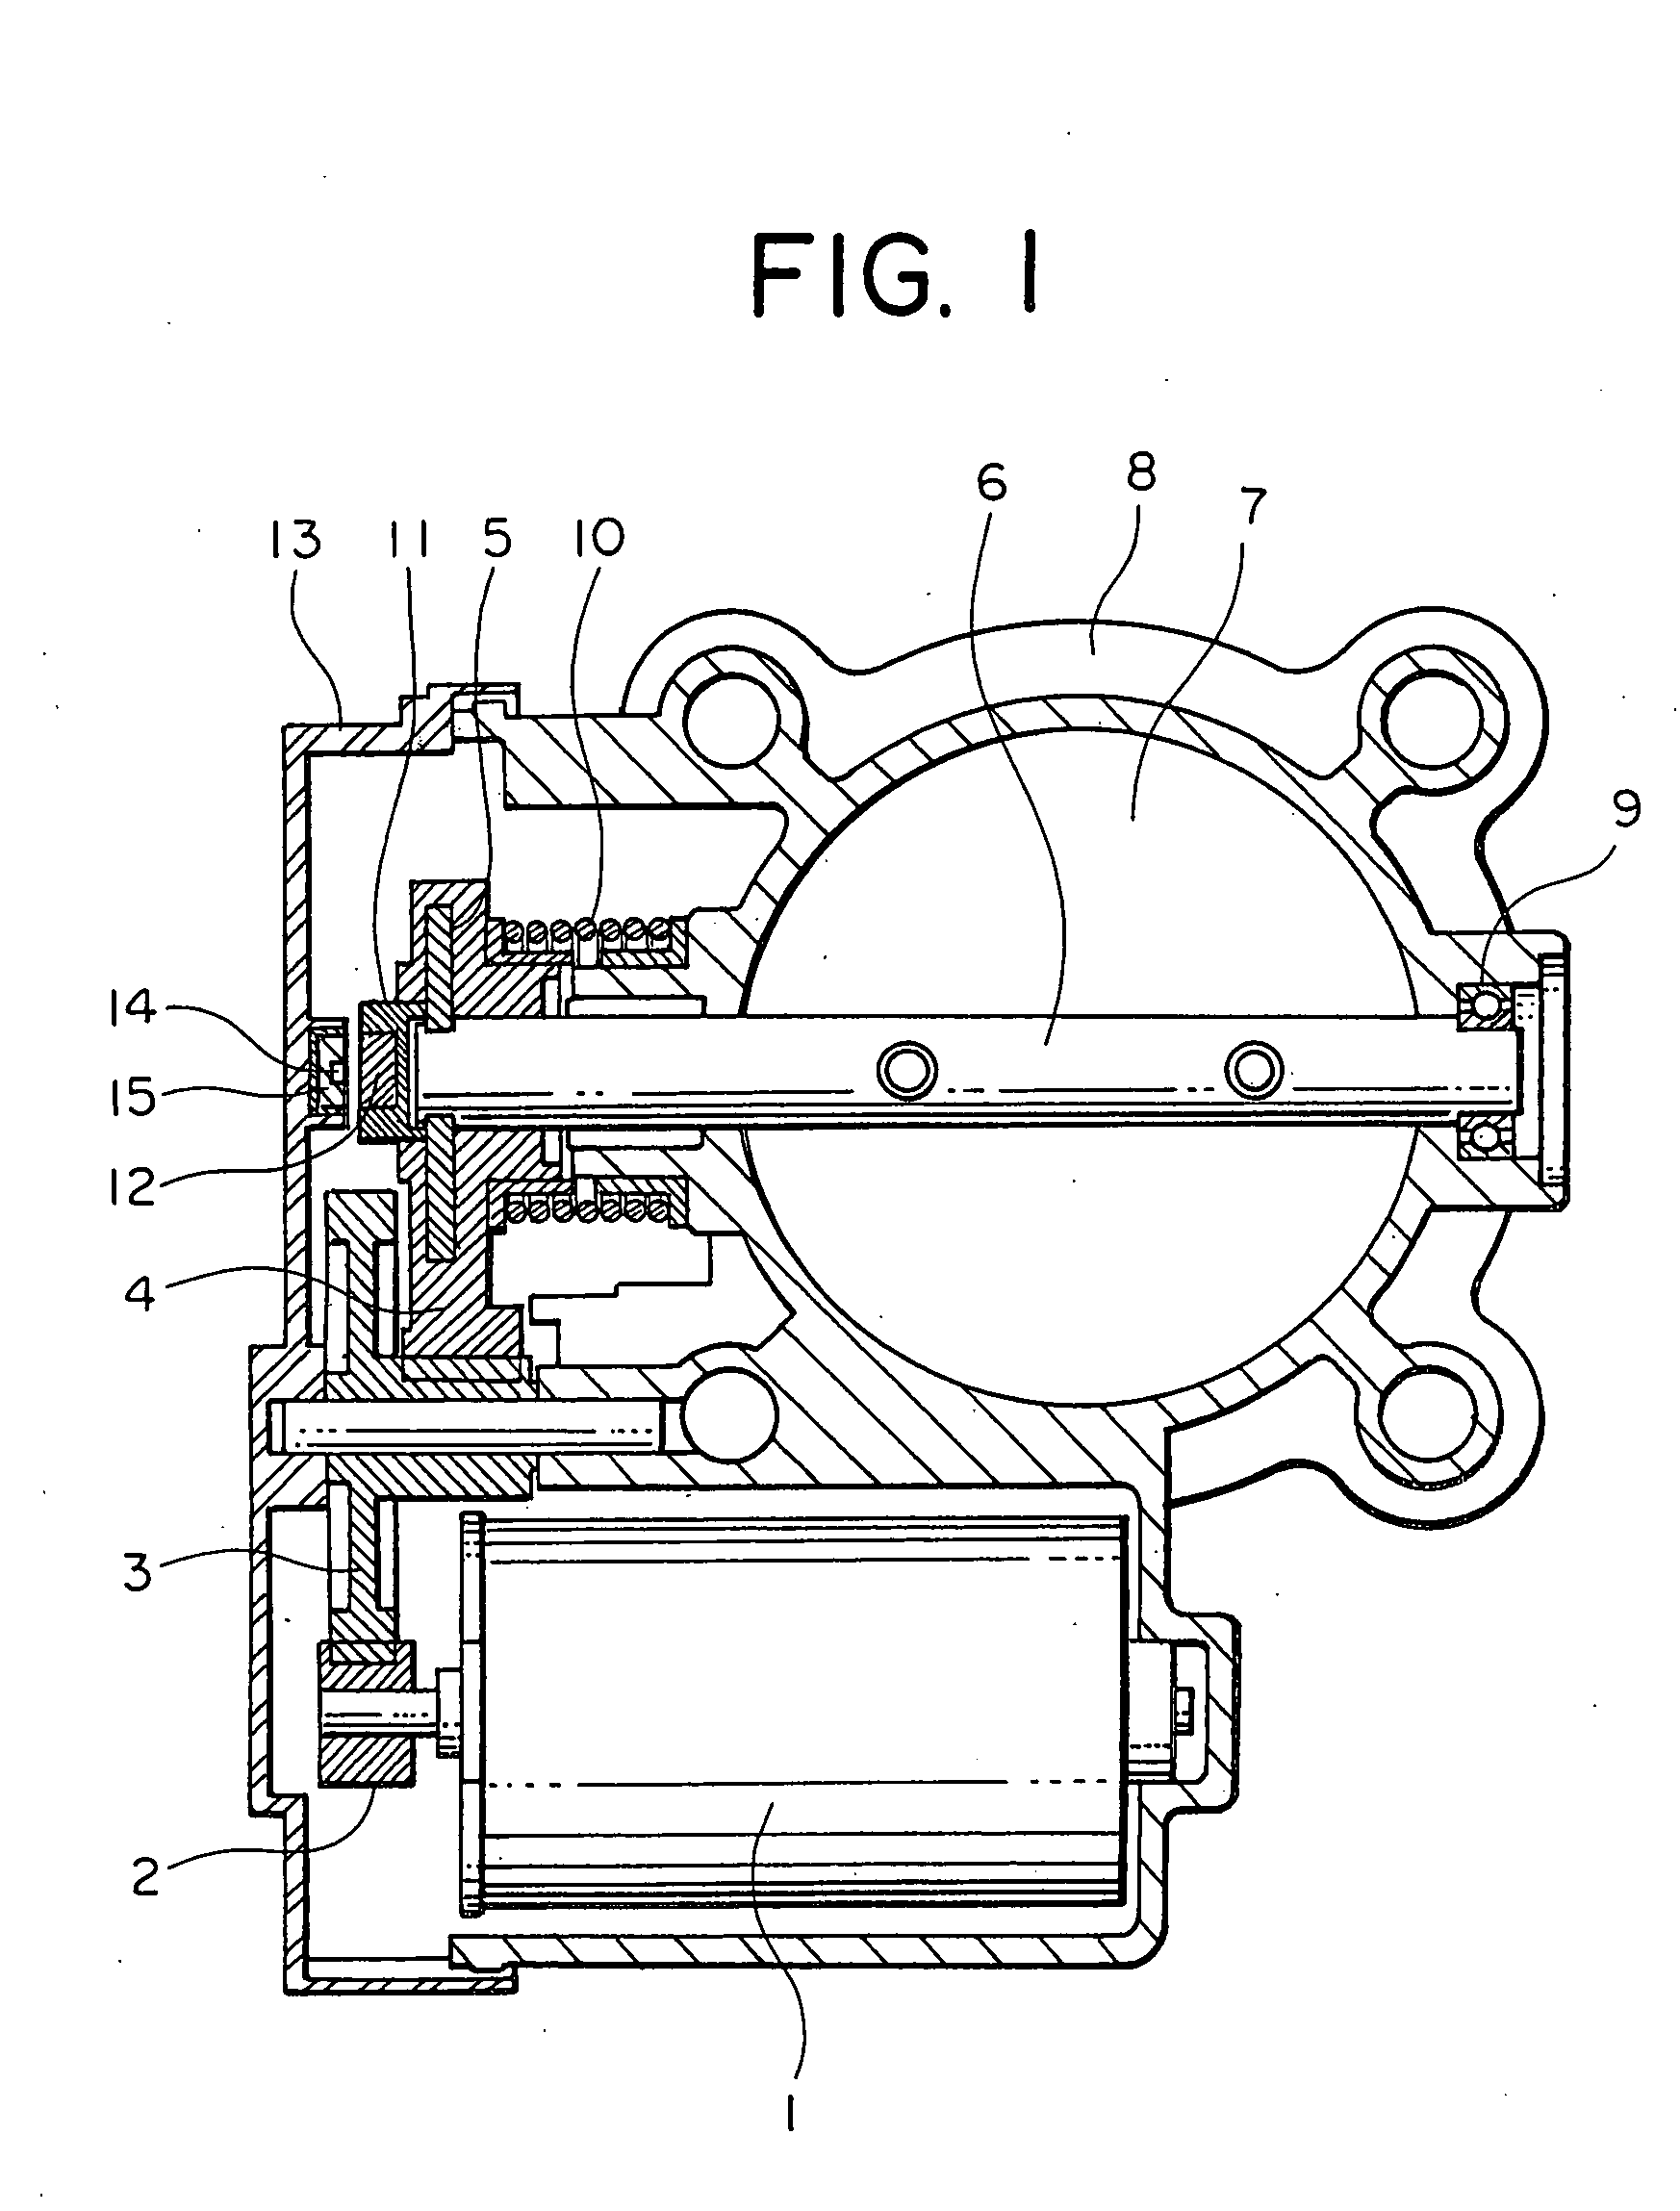 Intake air control apparatus for an engine